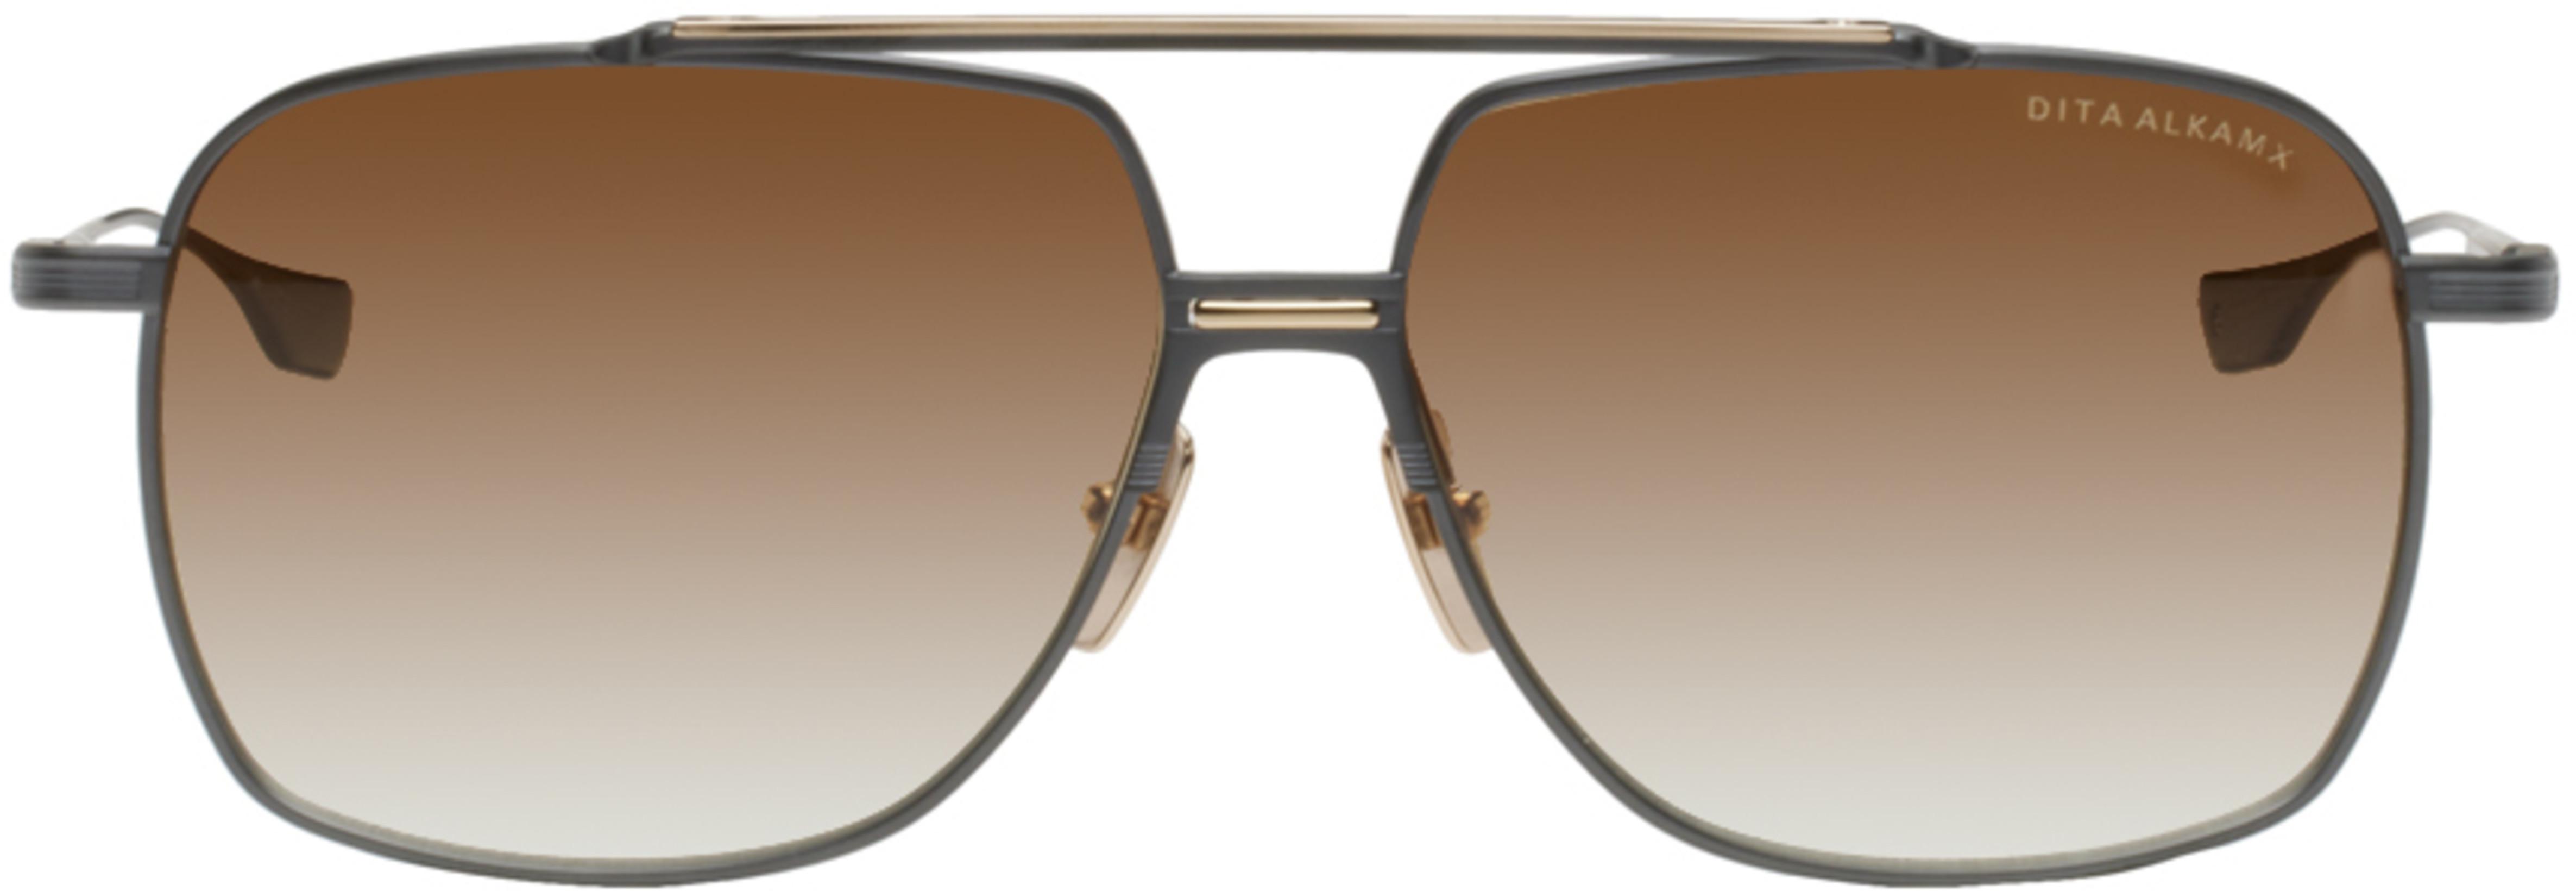 Gray & Gold Alkamx Sunglasses by DITA